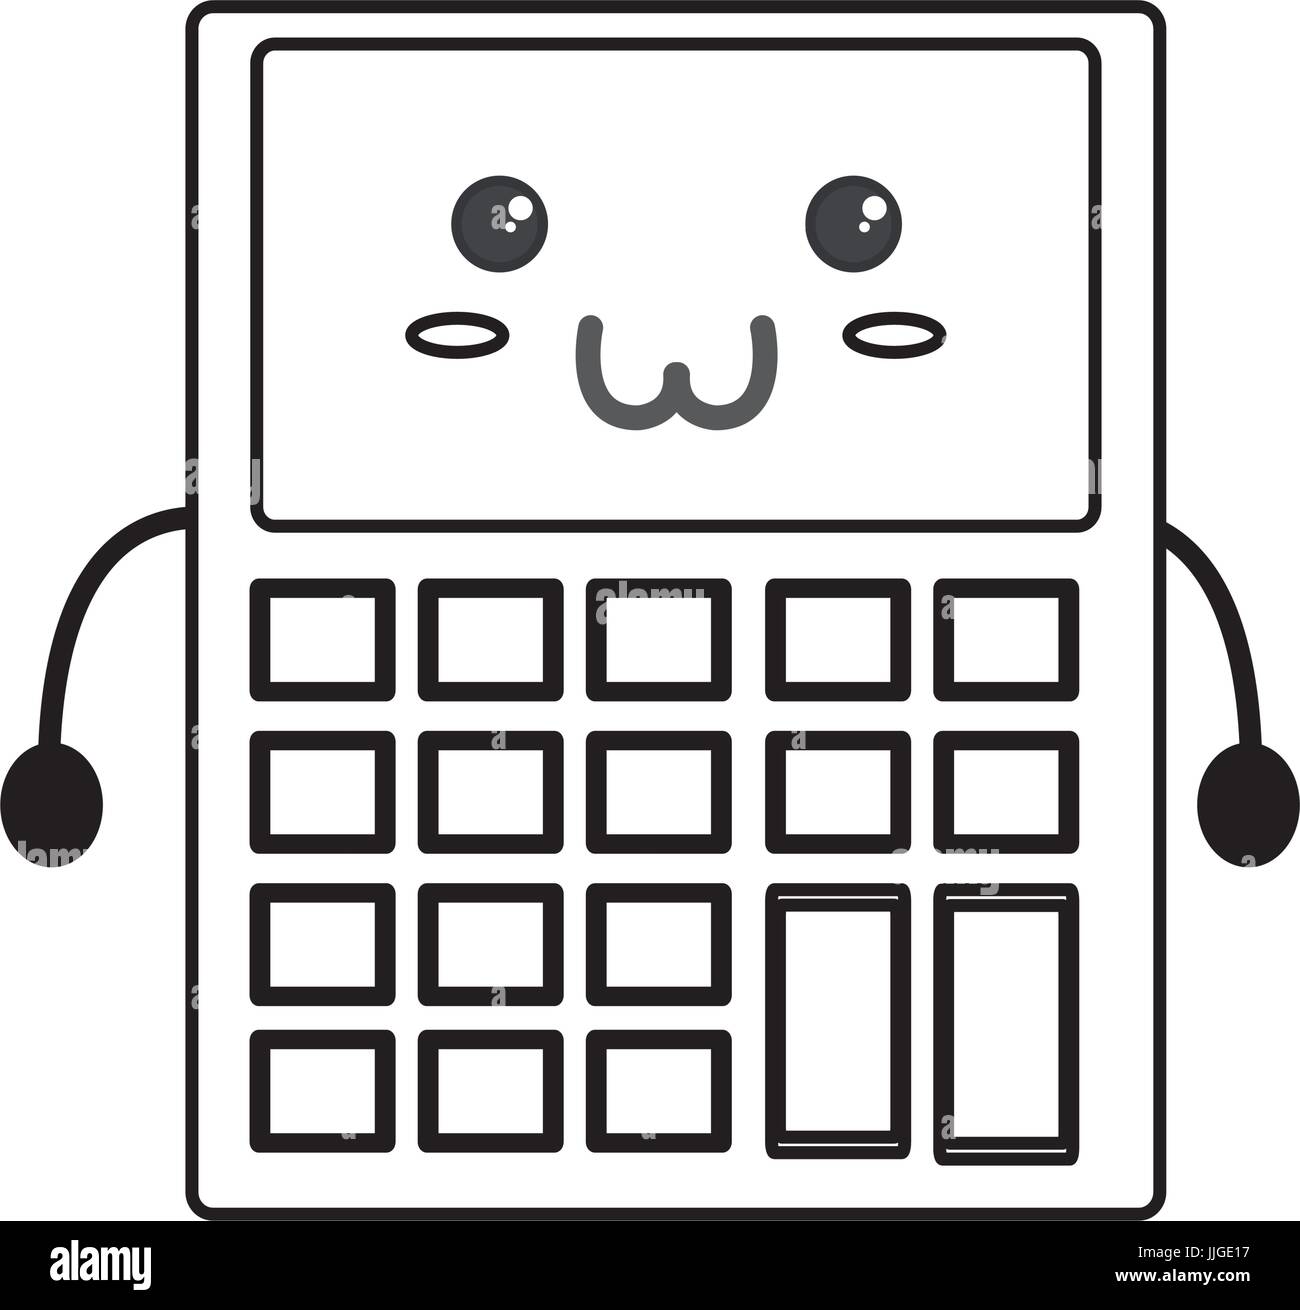 Cute calculator kawaii icon vector illustration graphic design Stock Vector  Image & Art - Alamy